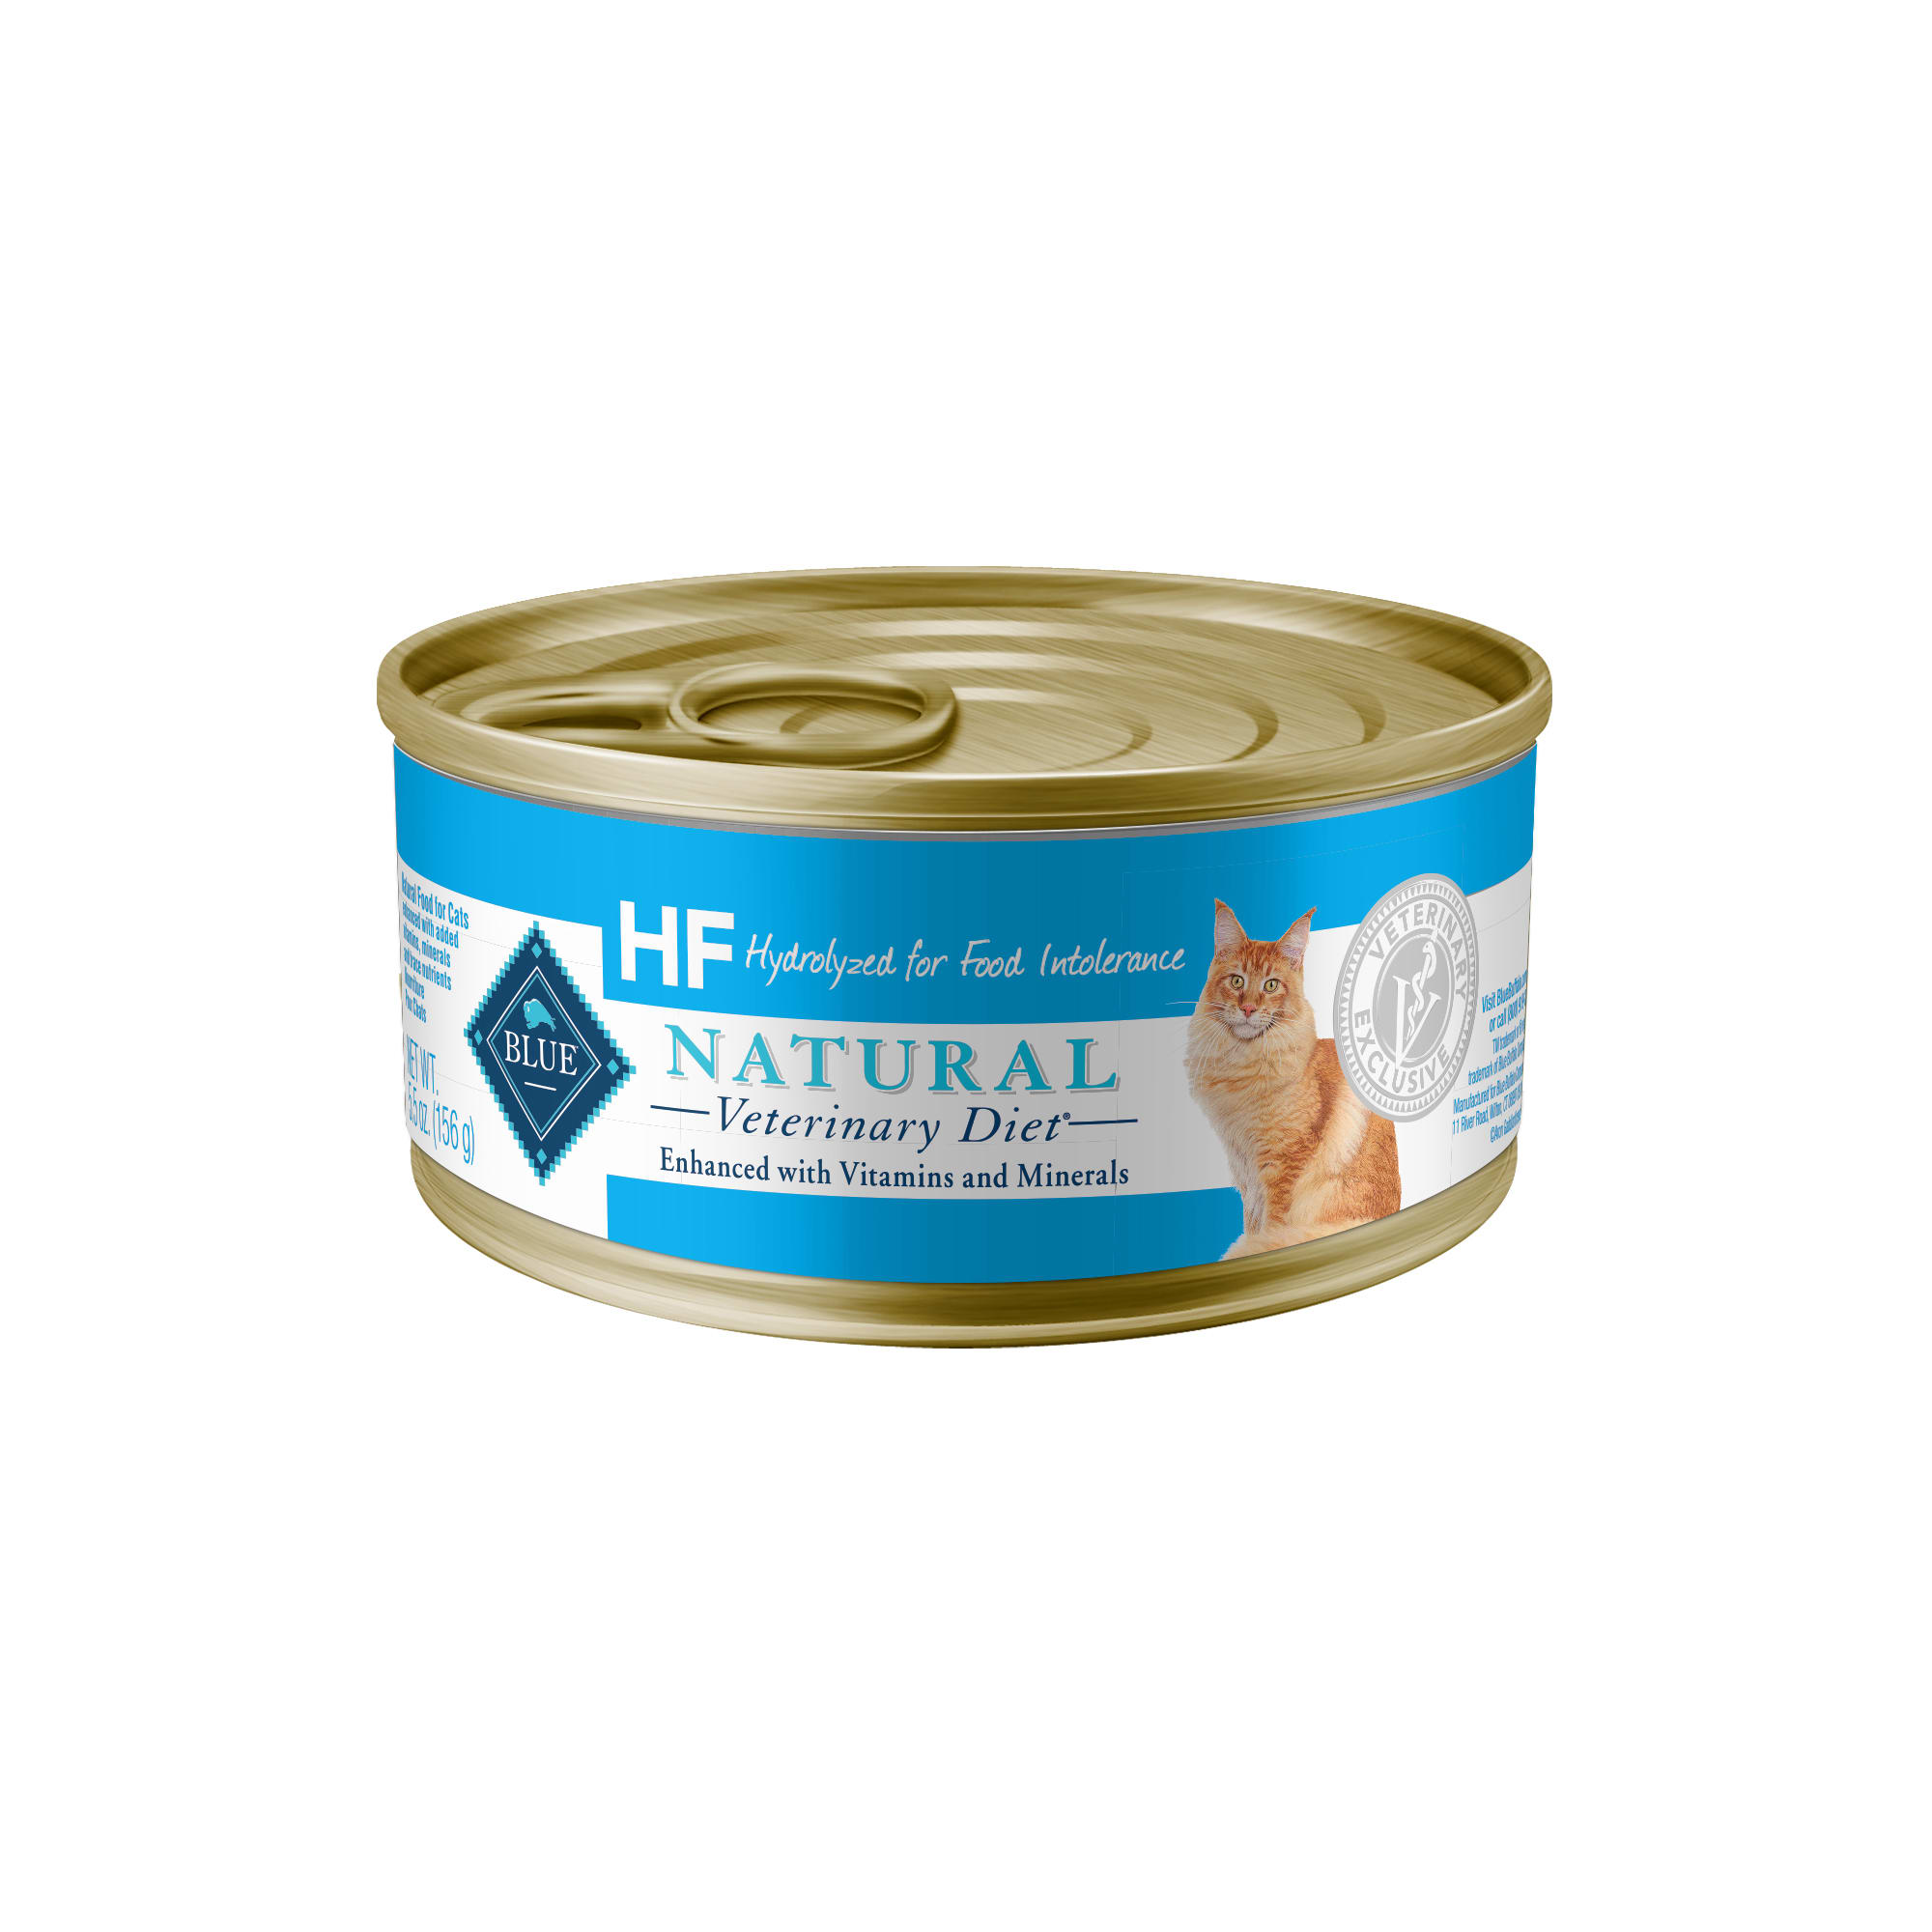 Hydrolyzed Protein Wet Cat Food